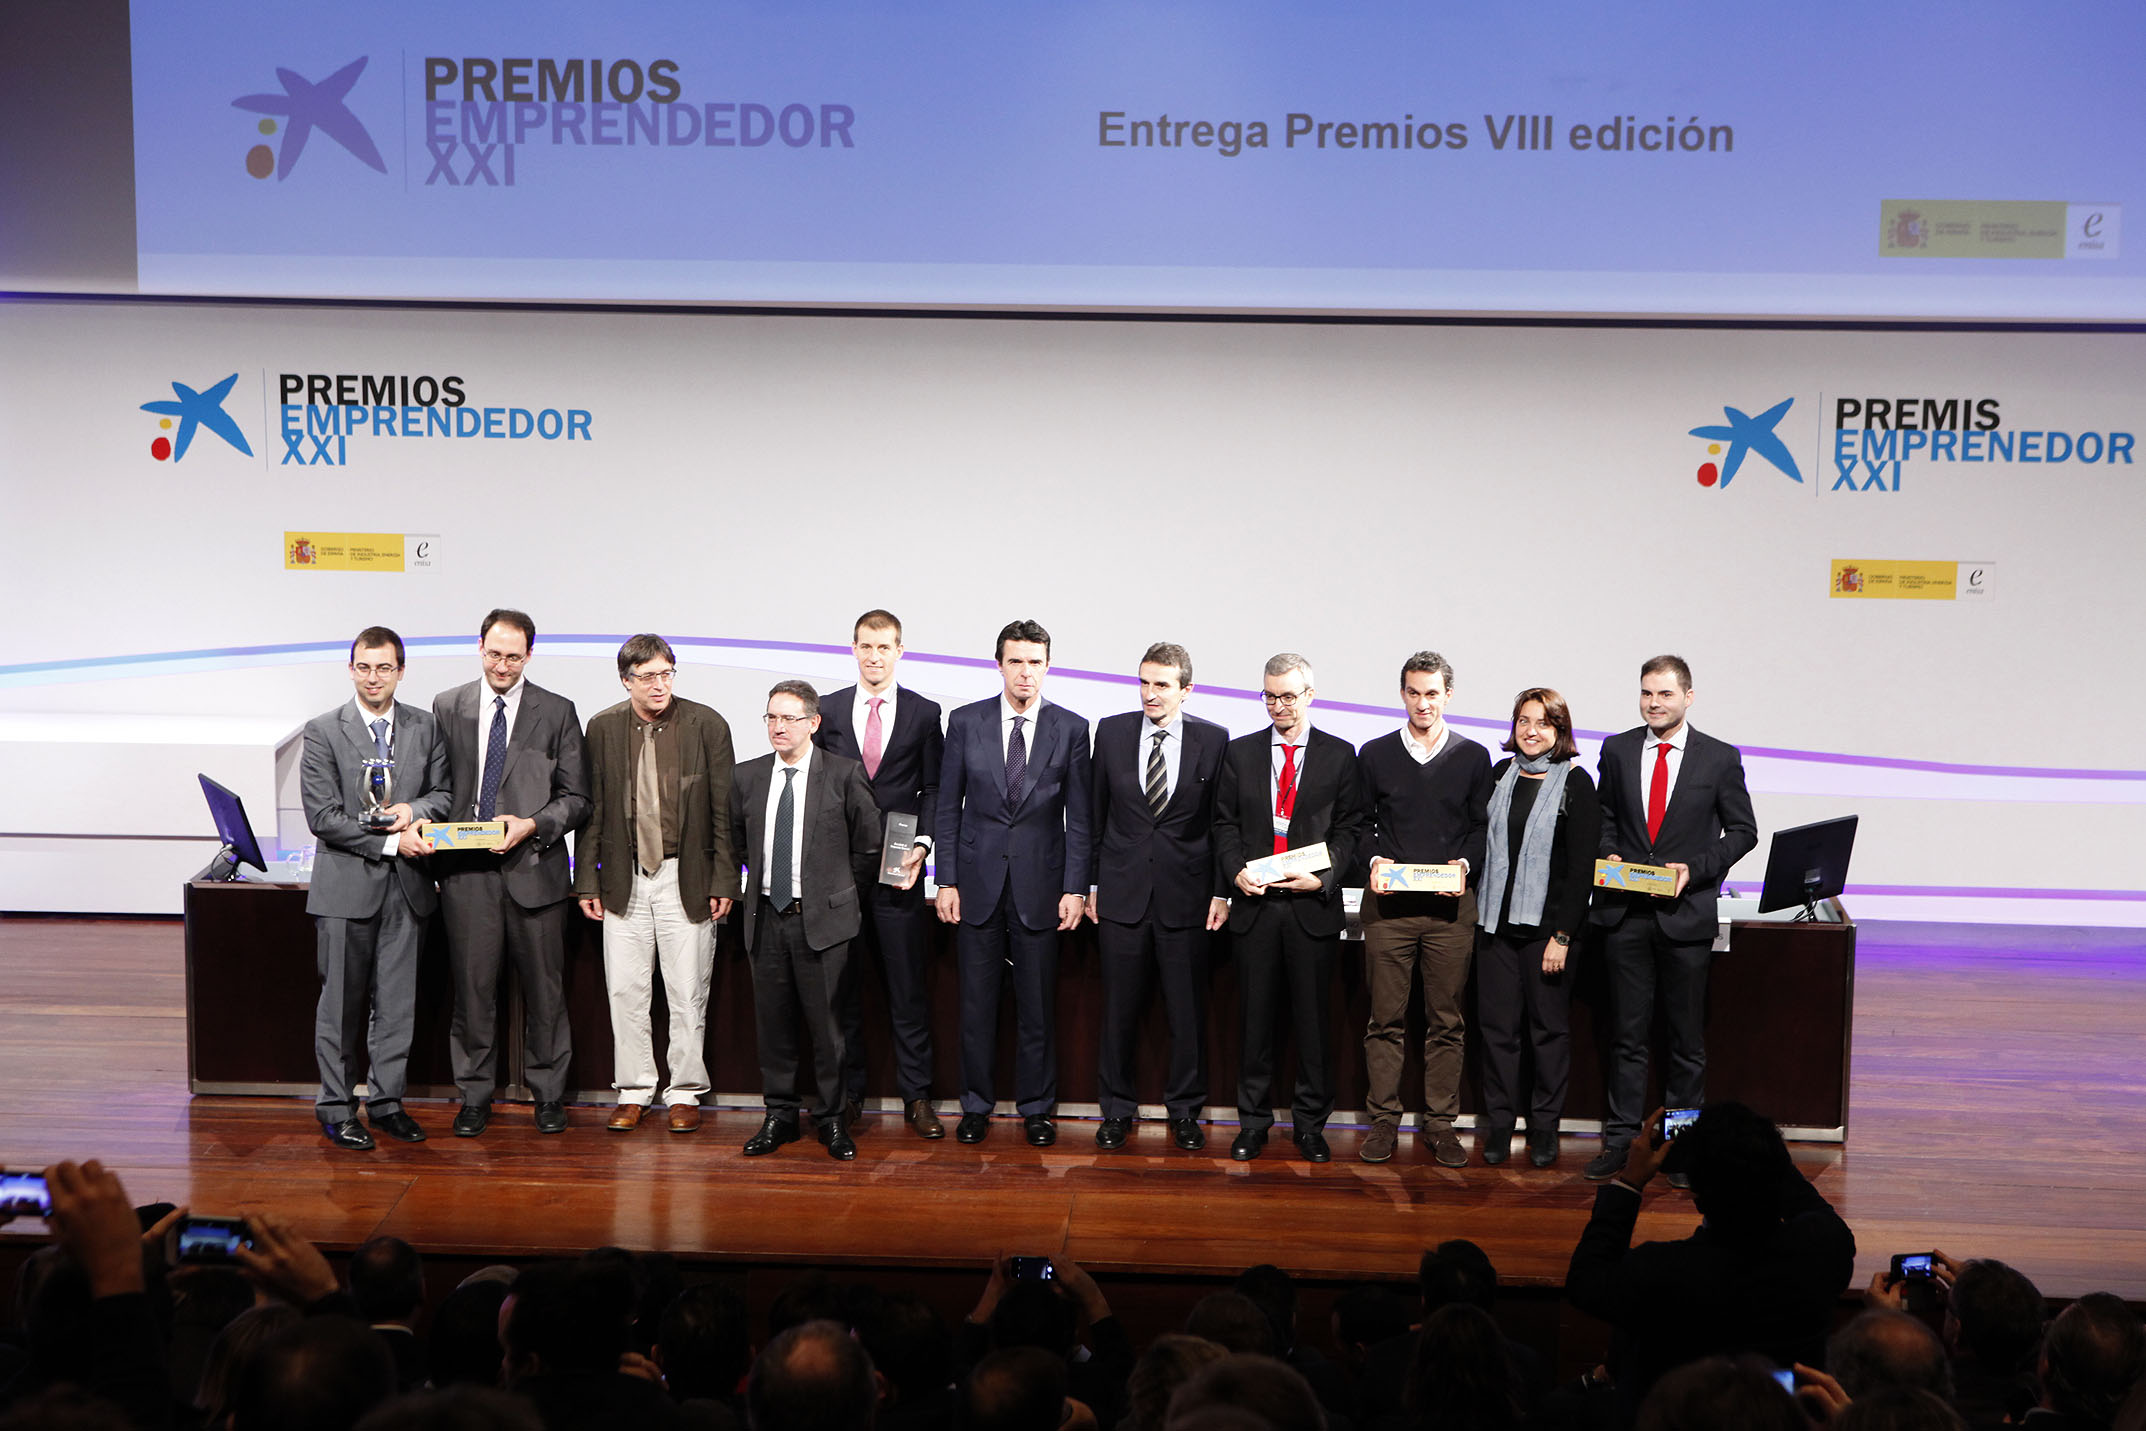 Premios EmprendedorXXI - 2014